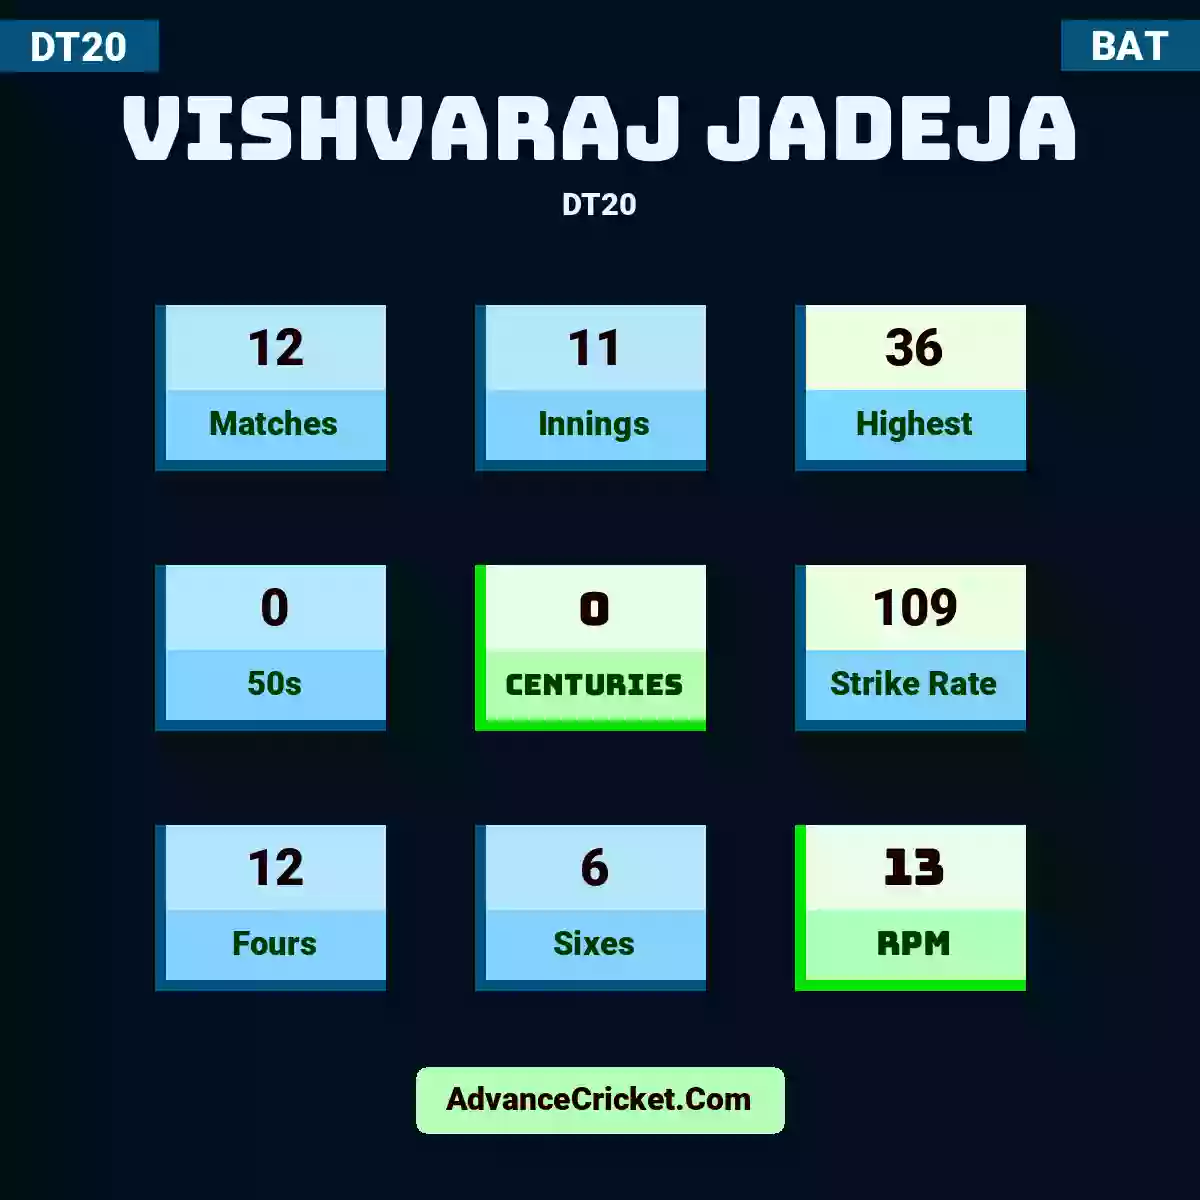 Vishvaraj Jadeja DT20 , Vishvaraj Jadeja played 12 matches, scored 36 runs as highest, 0 half-centuries, and 0 centuries, with a strike rate of 109. V.Jadeja hit 12 fours and 6 sixes, with an RPM of 13.